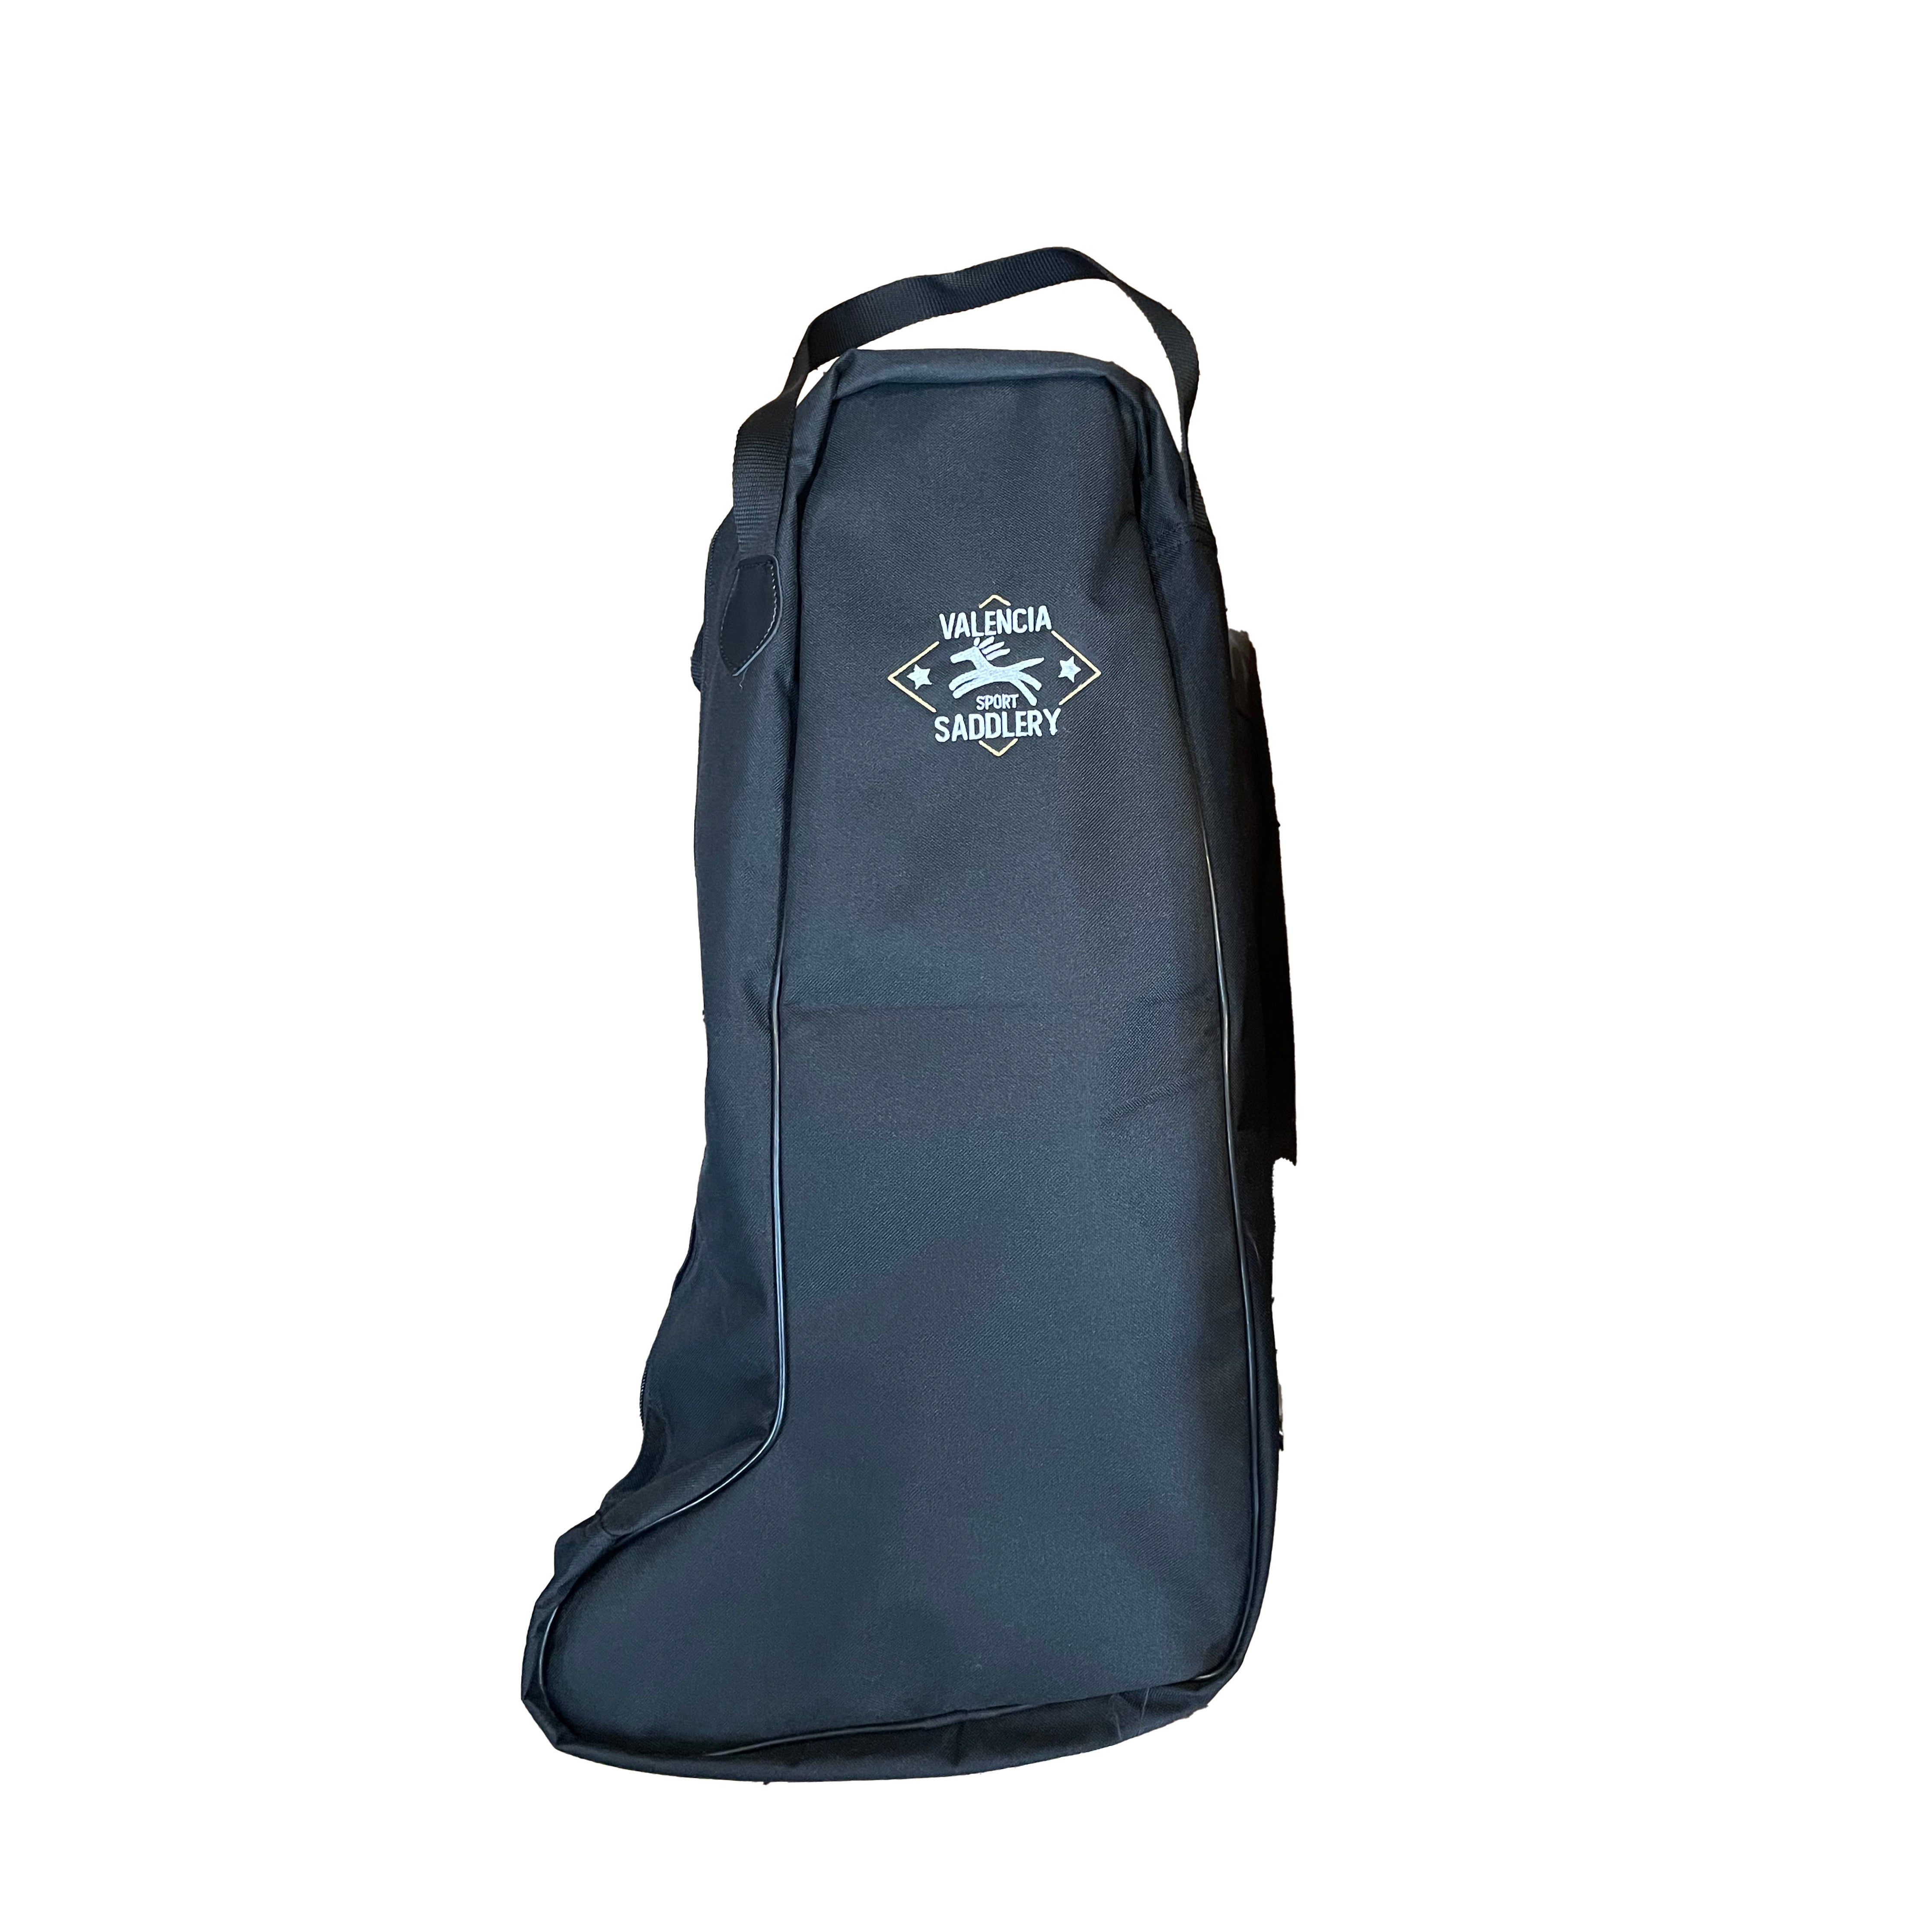 VSS Boot Bag - Black Nylon w/ pocket